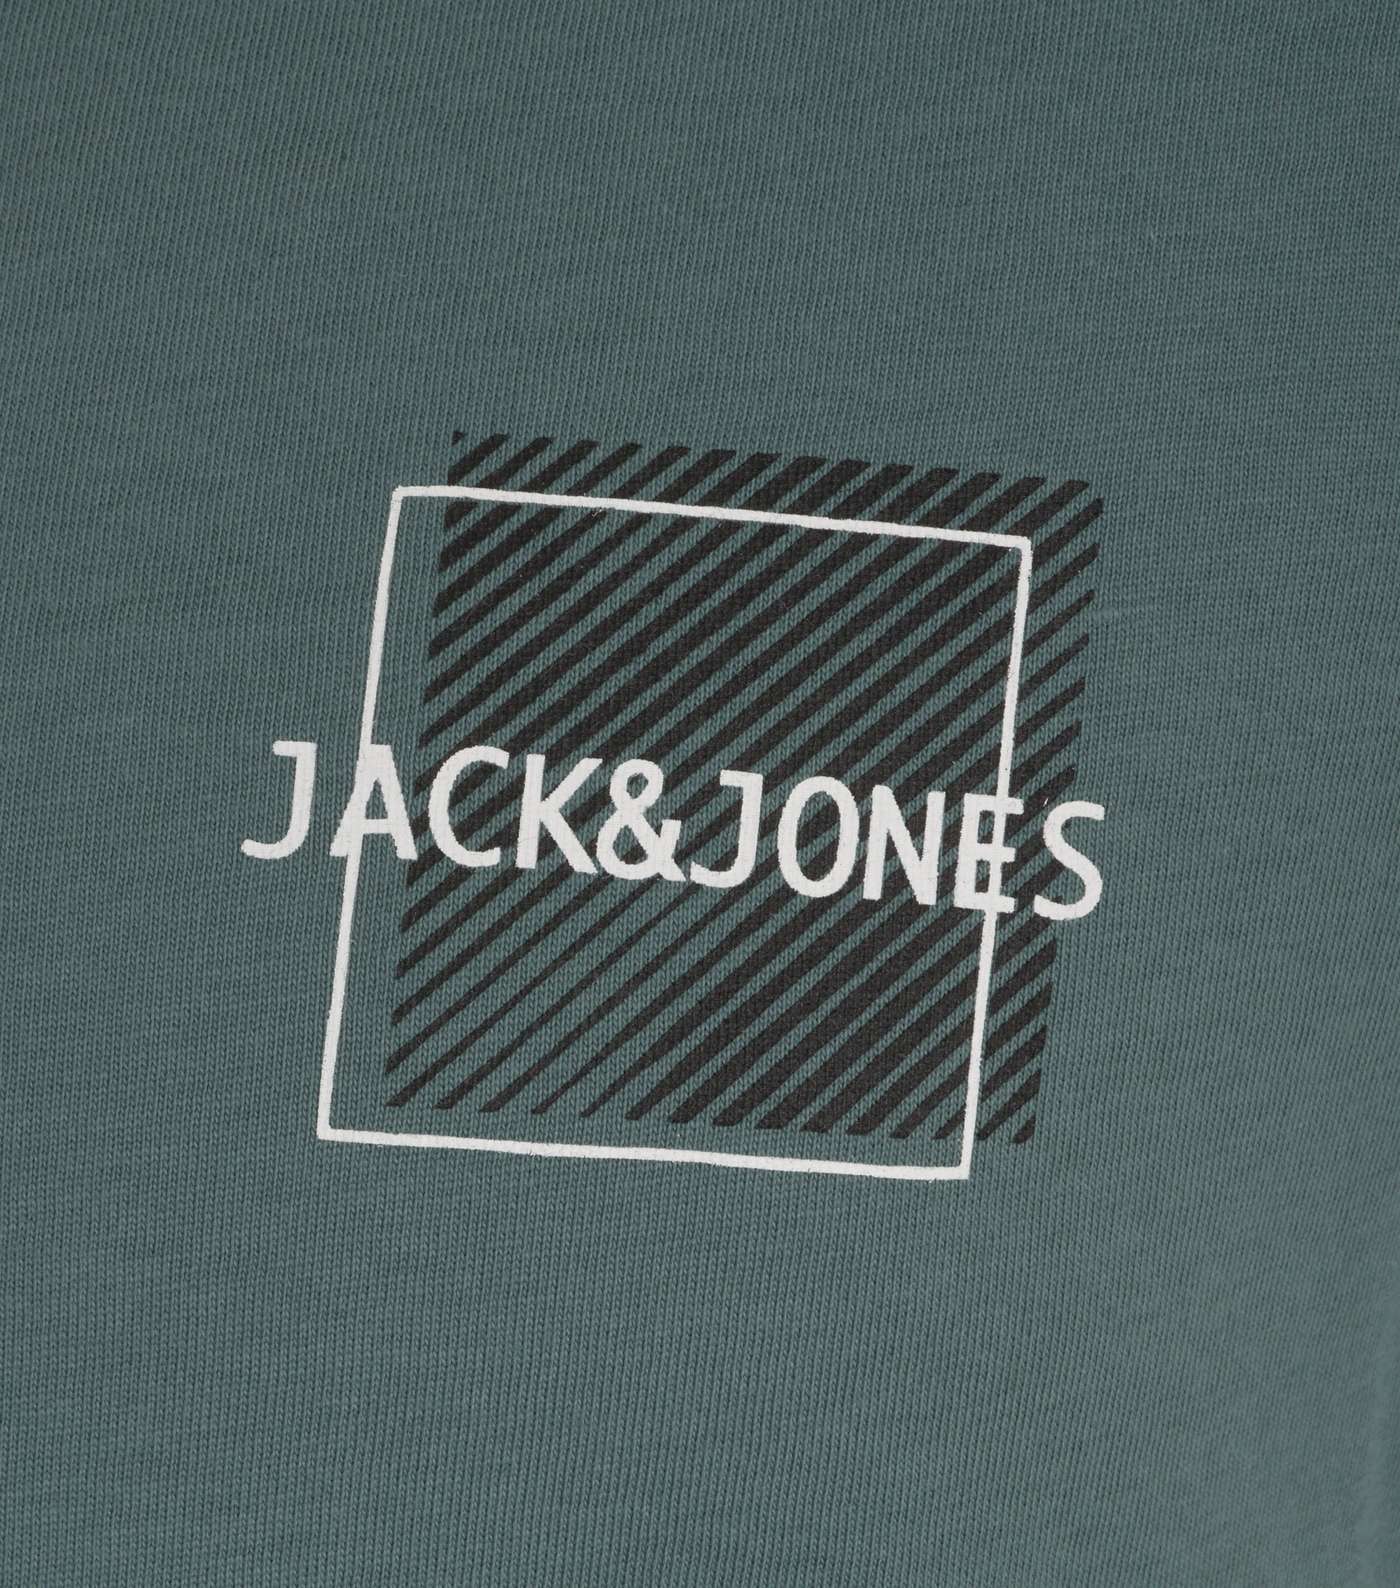 Jack & Jones Teal Square Logo T-Shirt Image 3